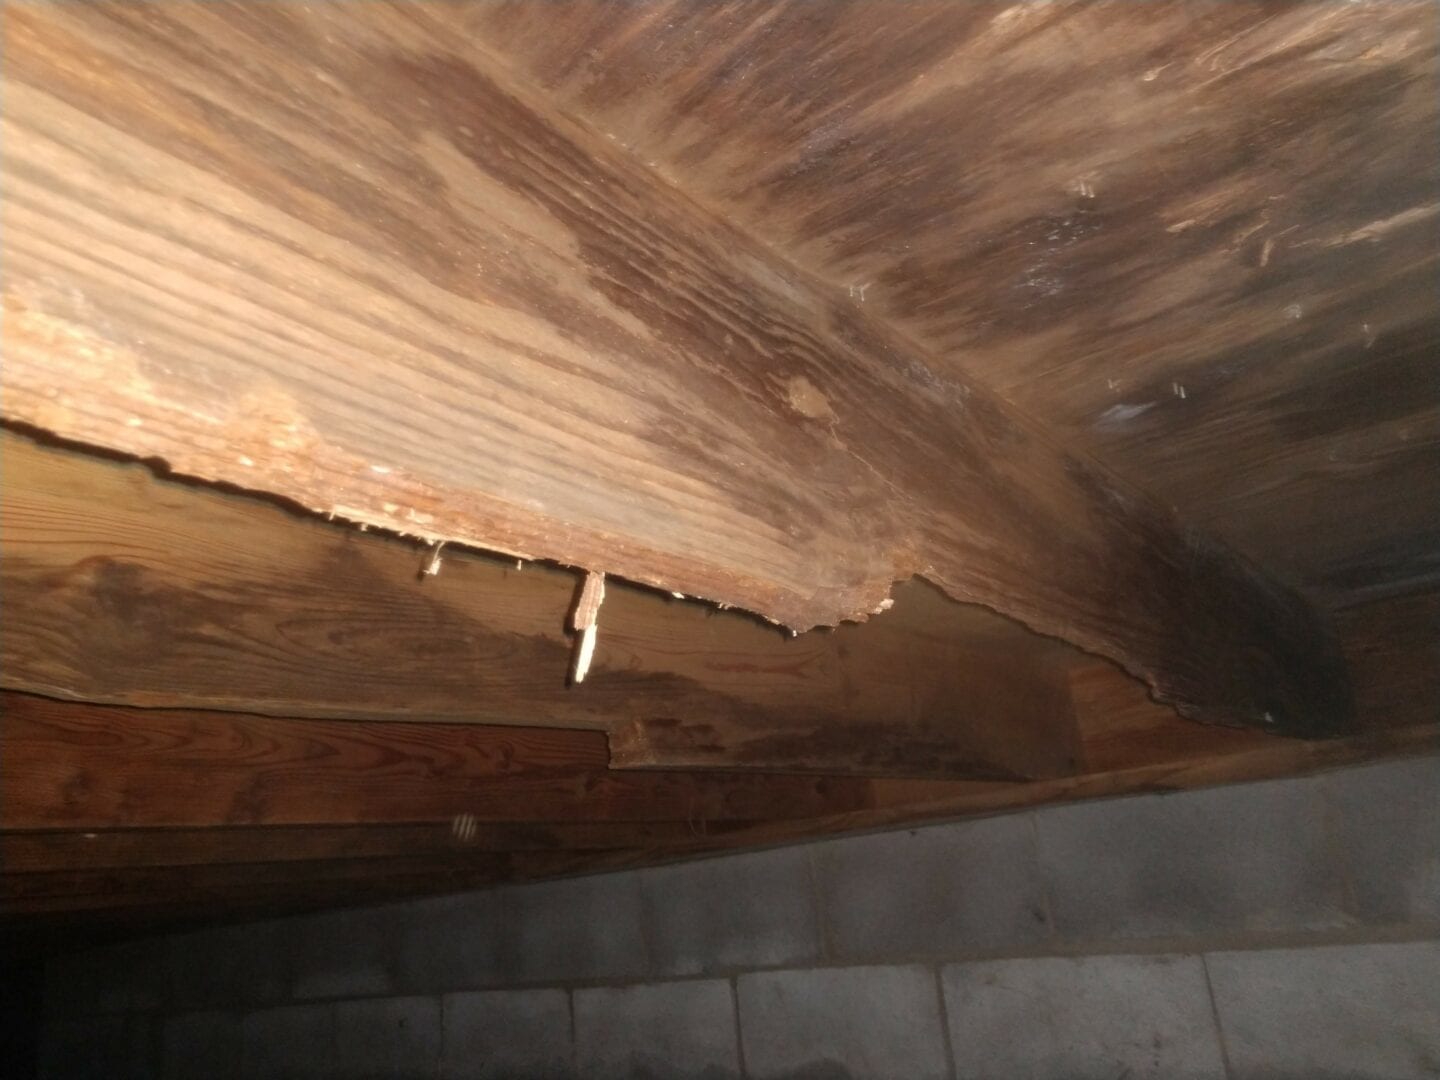 wooden floor affected by moisture problem